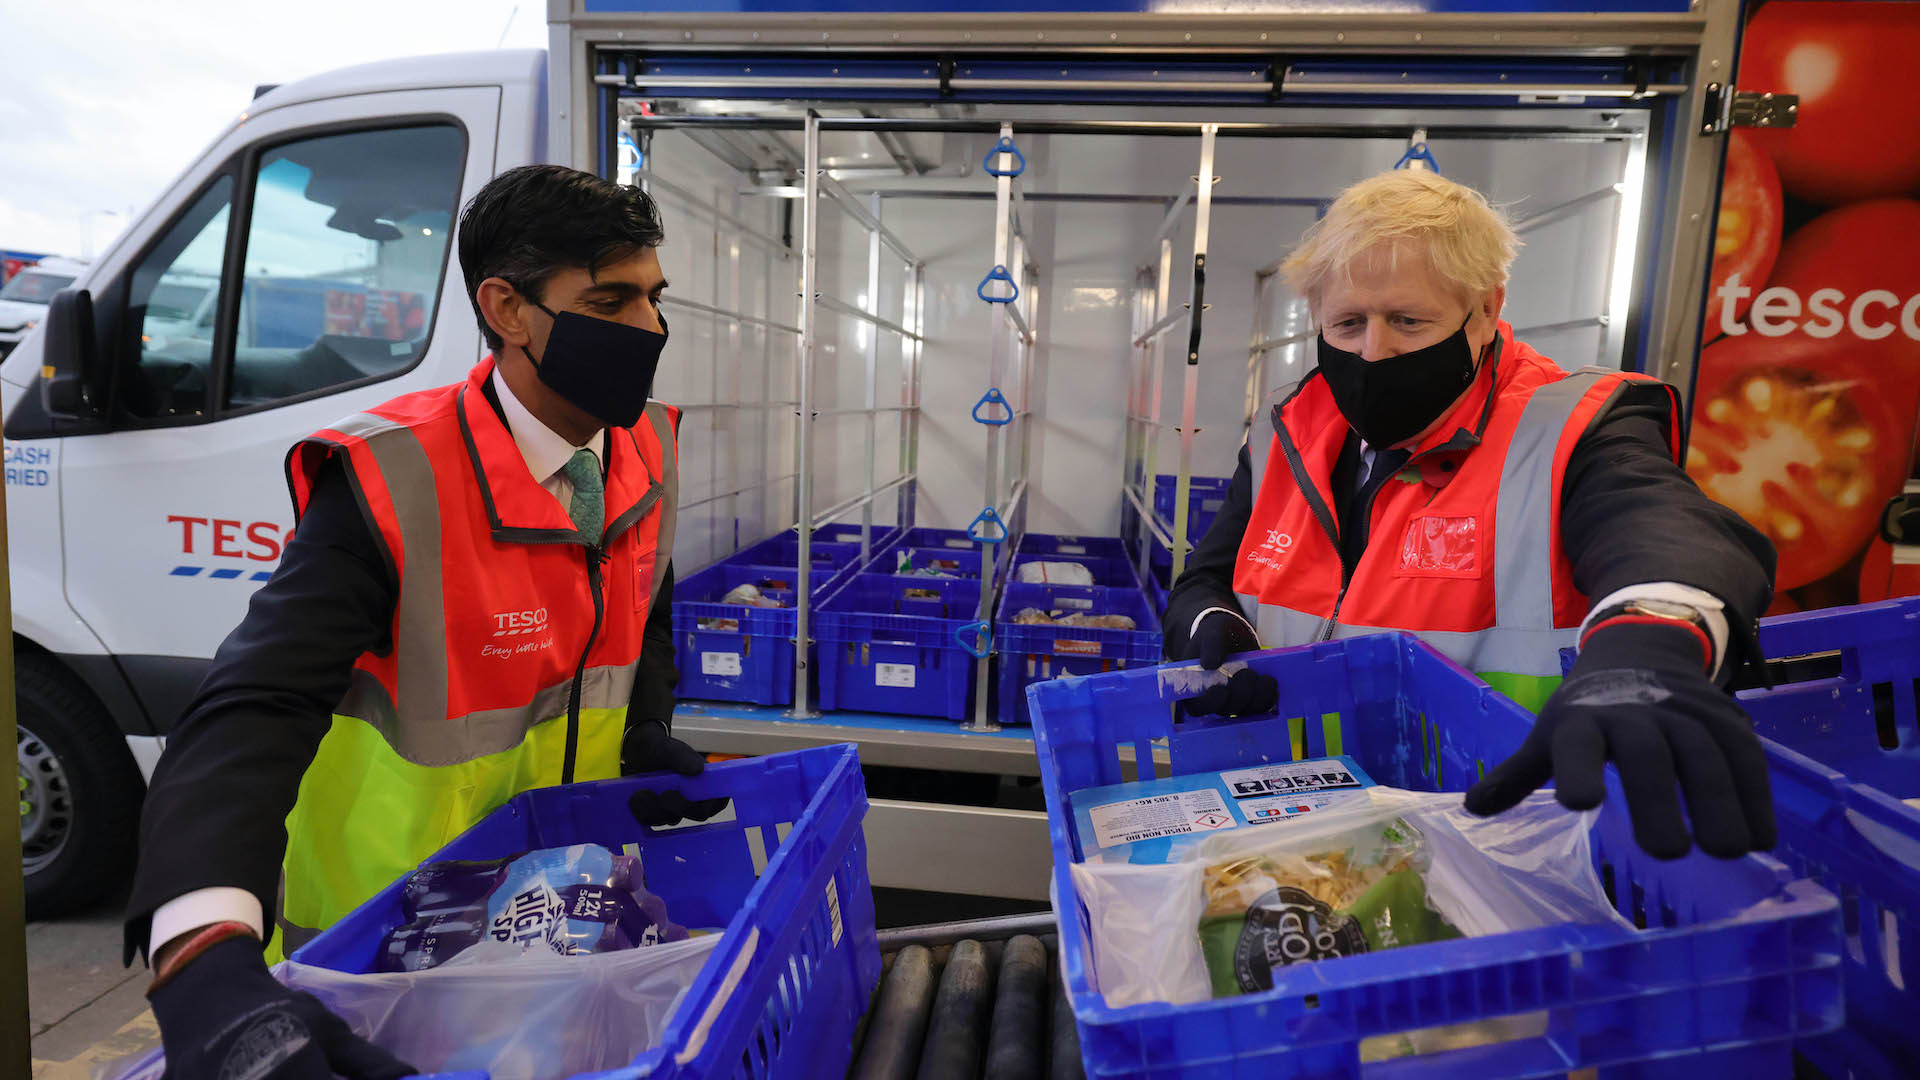 Boris Johnson and Rishi Sunak unload crates at Tesco